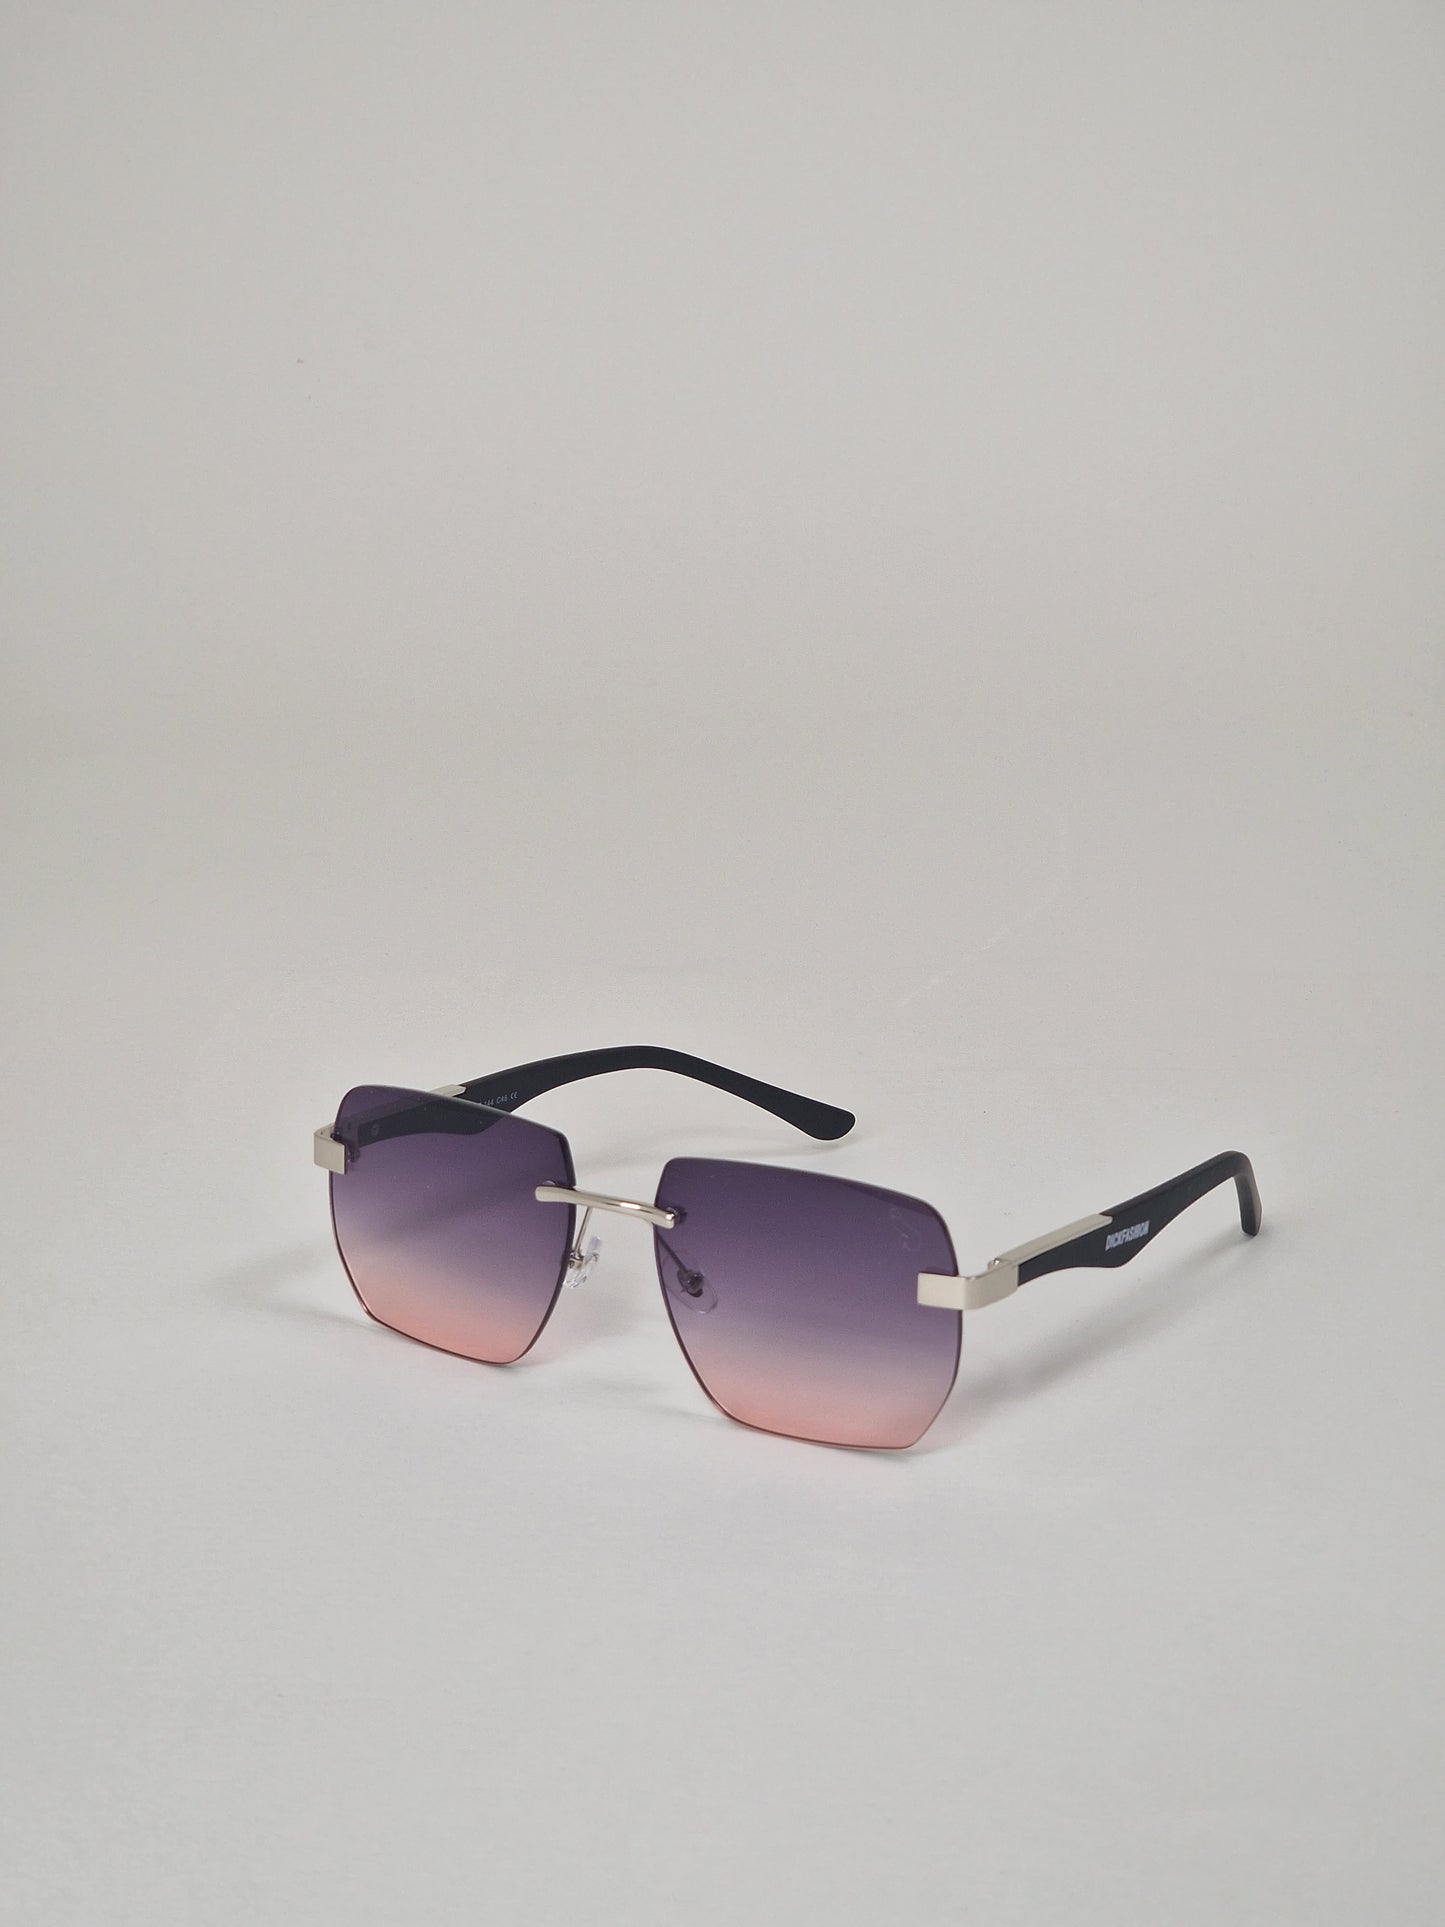 Sunglasses, model 41 - Lilac tinted.